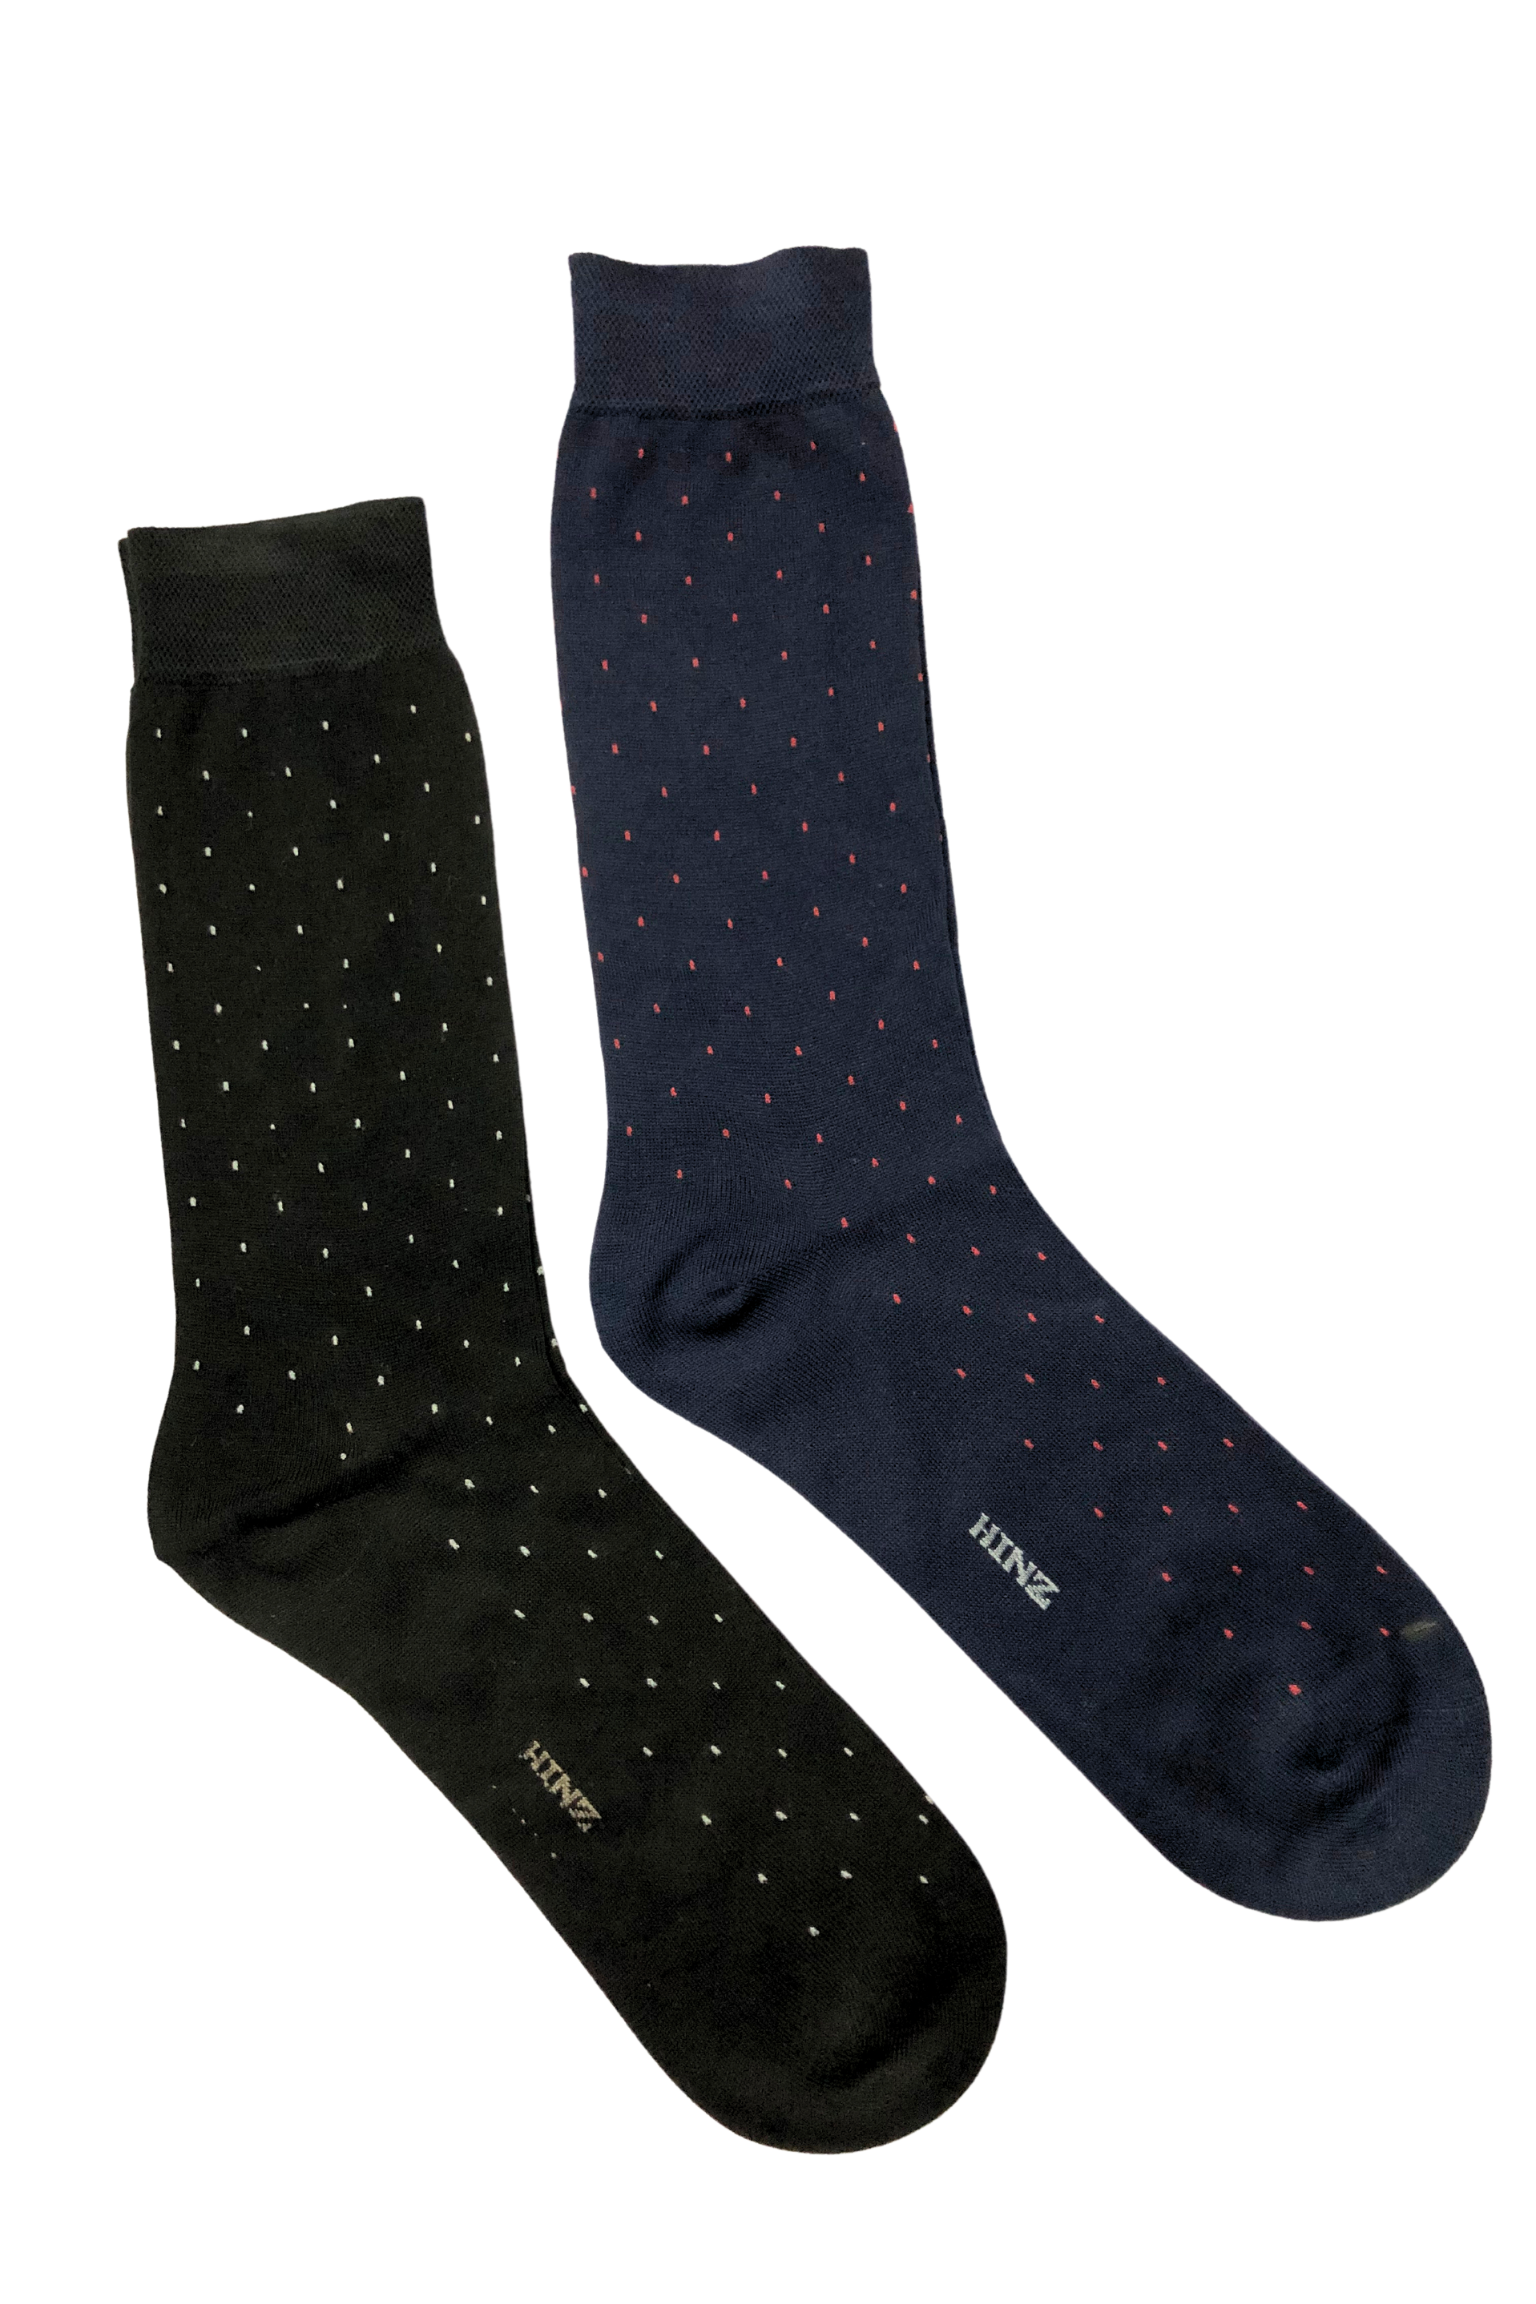 Premium Dotted Socks Pack of 4 (Black & Blue)